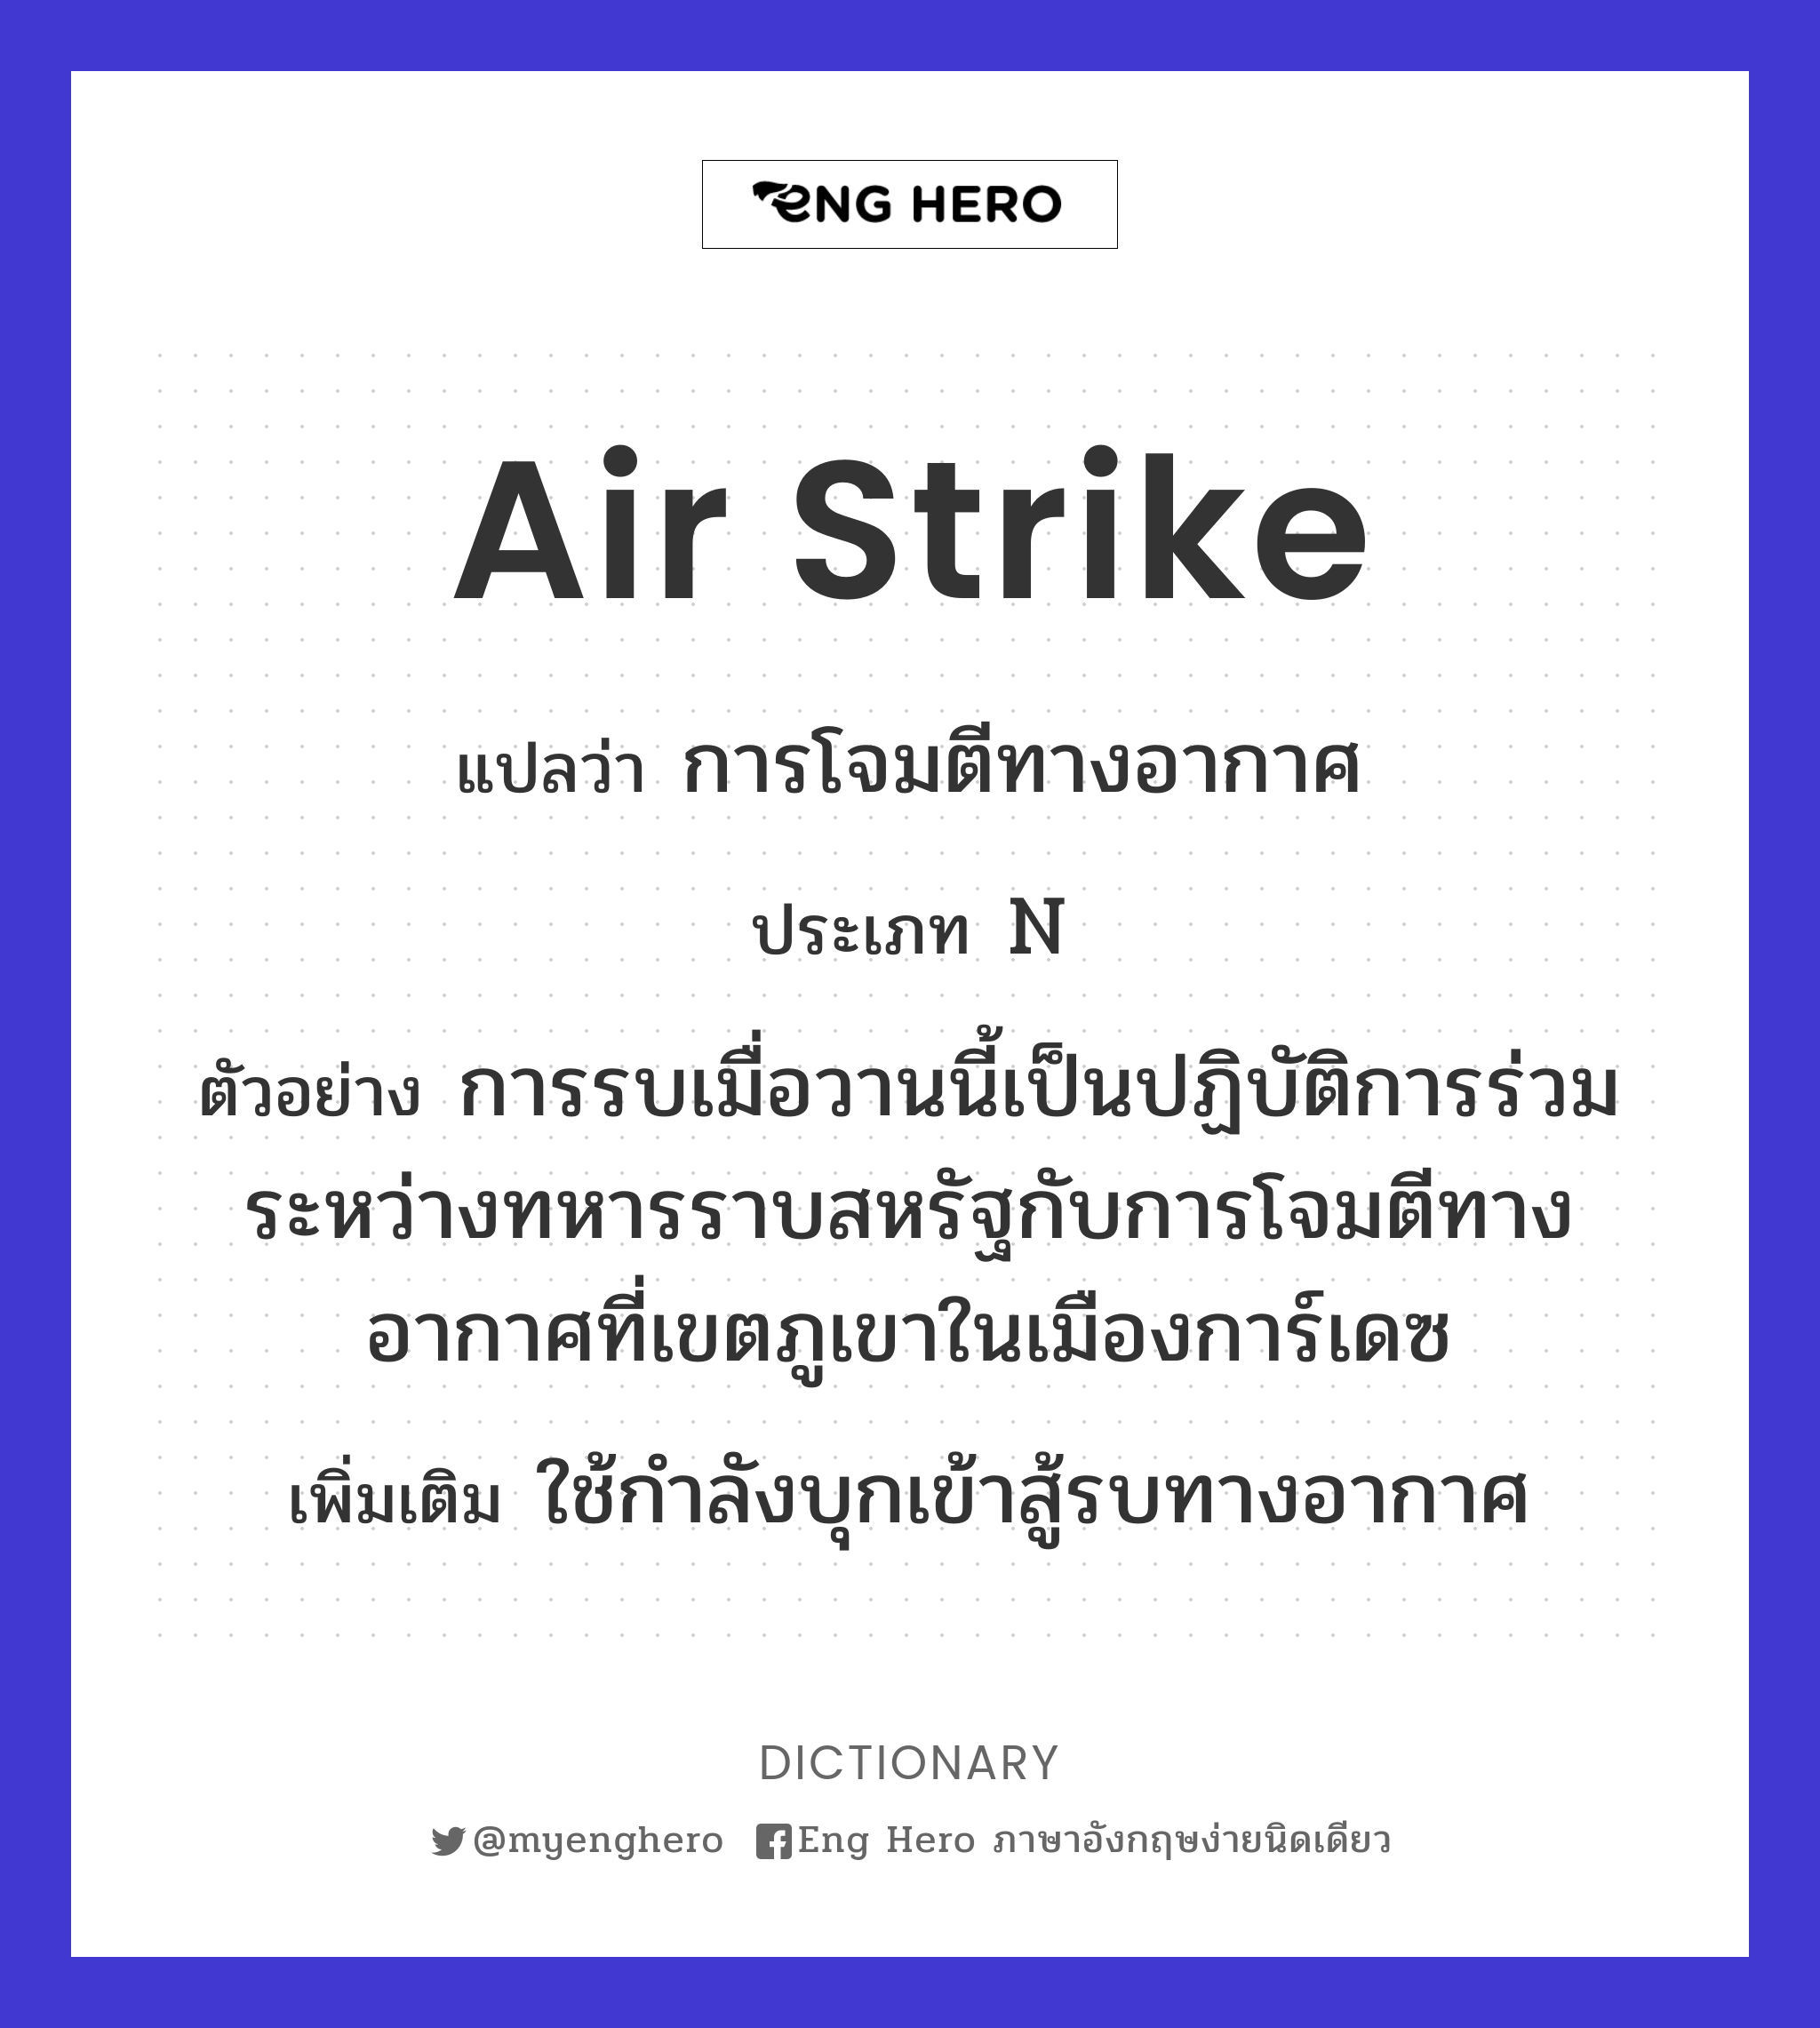 air strike